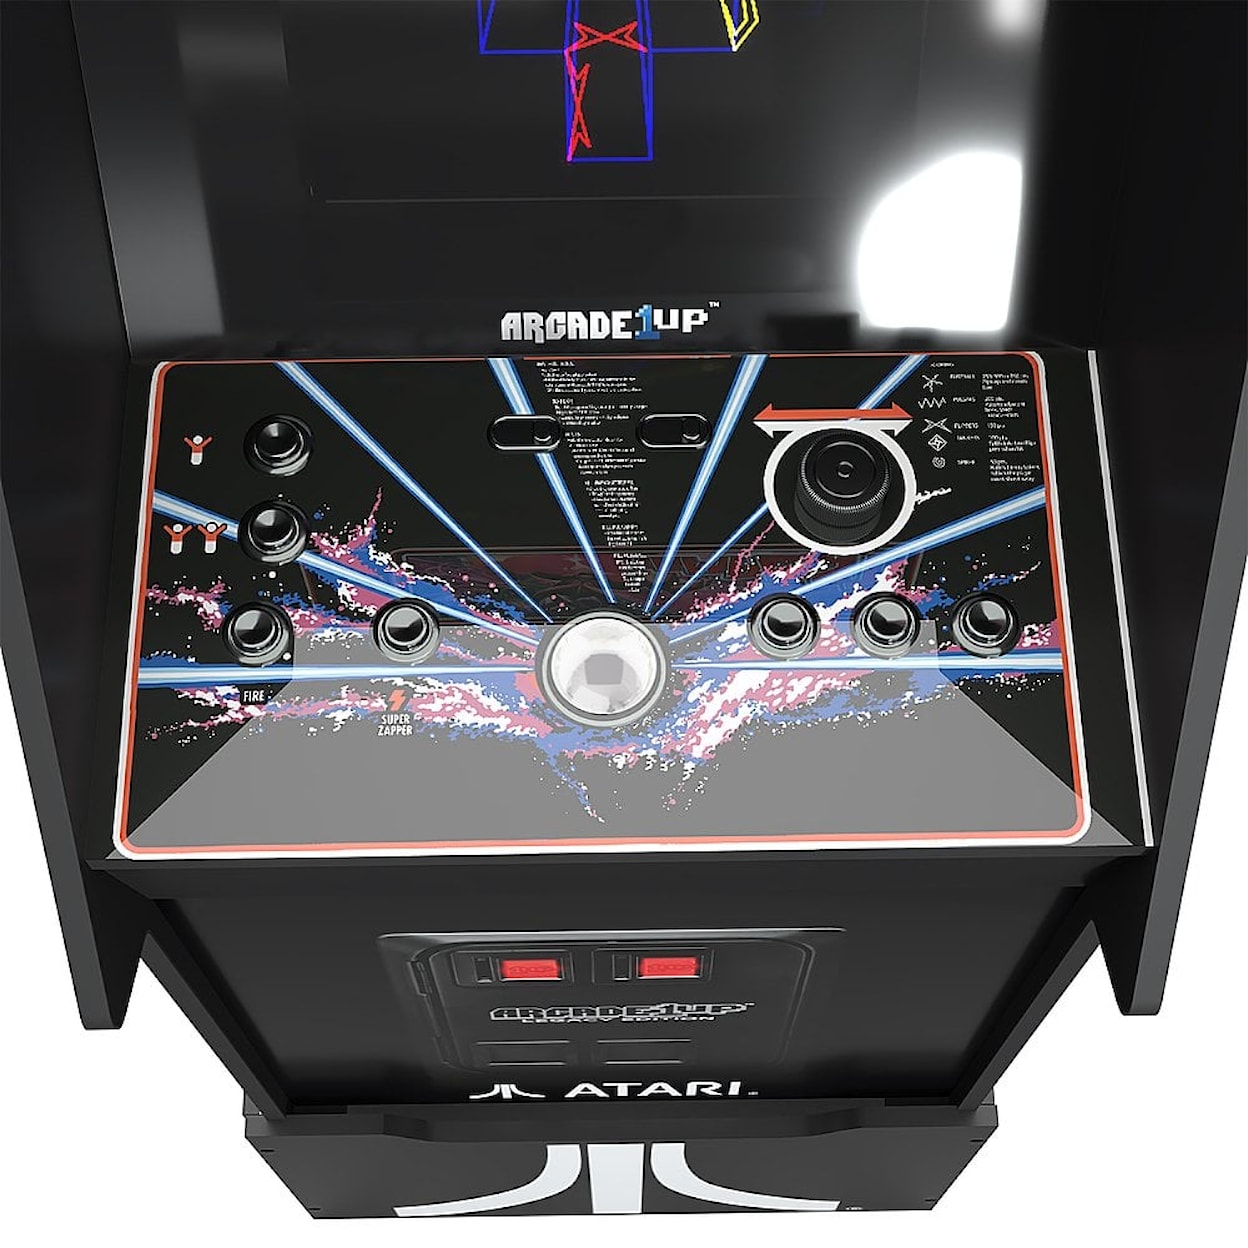 Sam's Furniture Gaming Arcade1Up - Atari Tempest Legacy Arcade